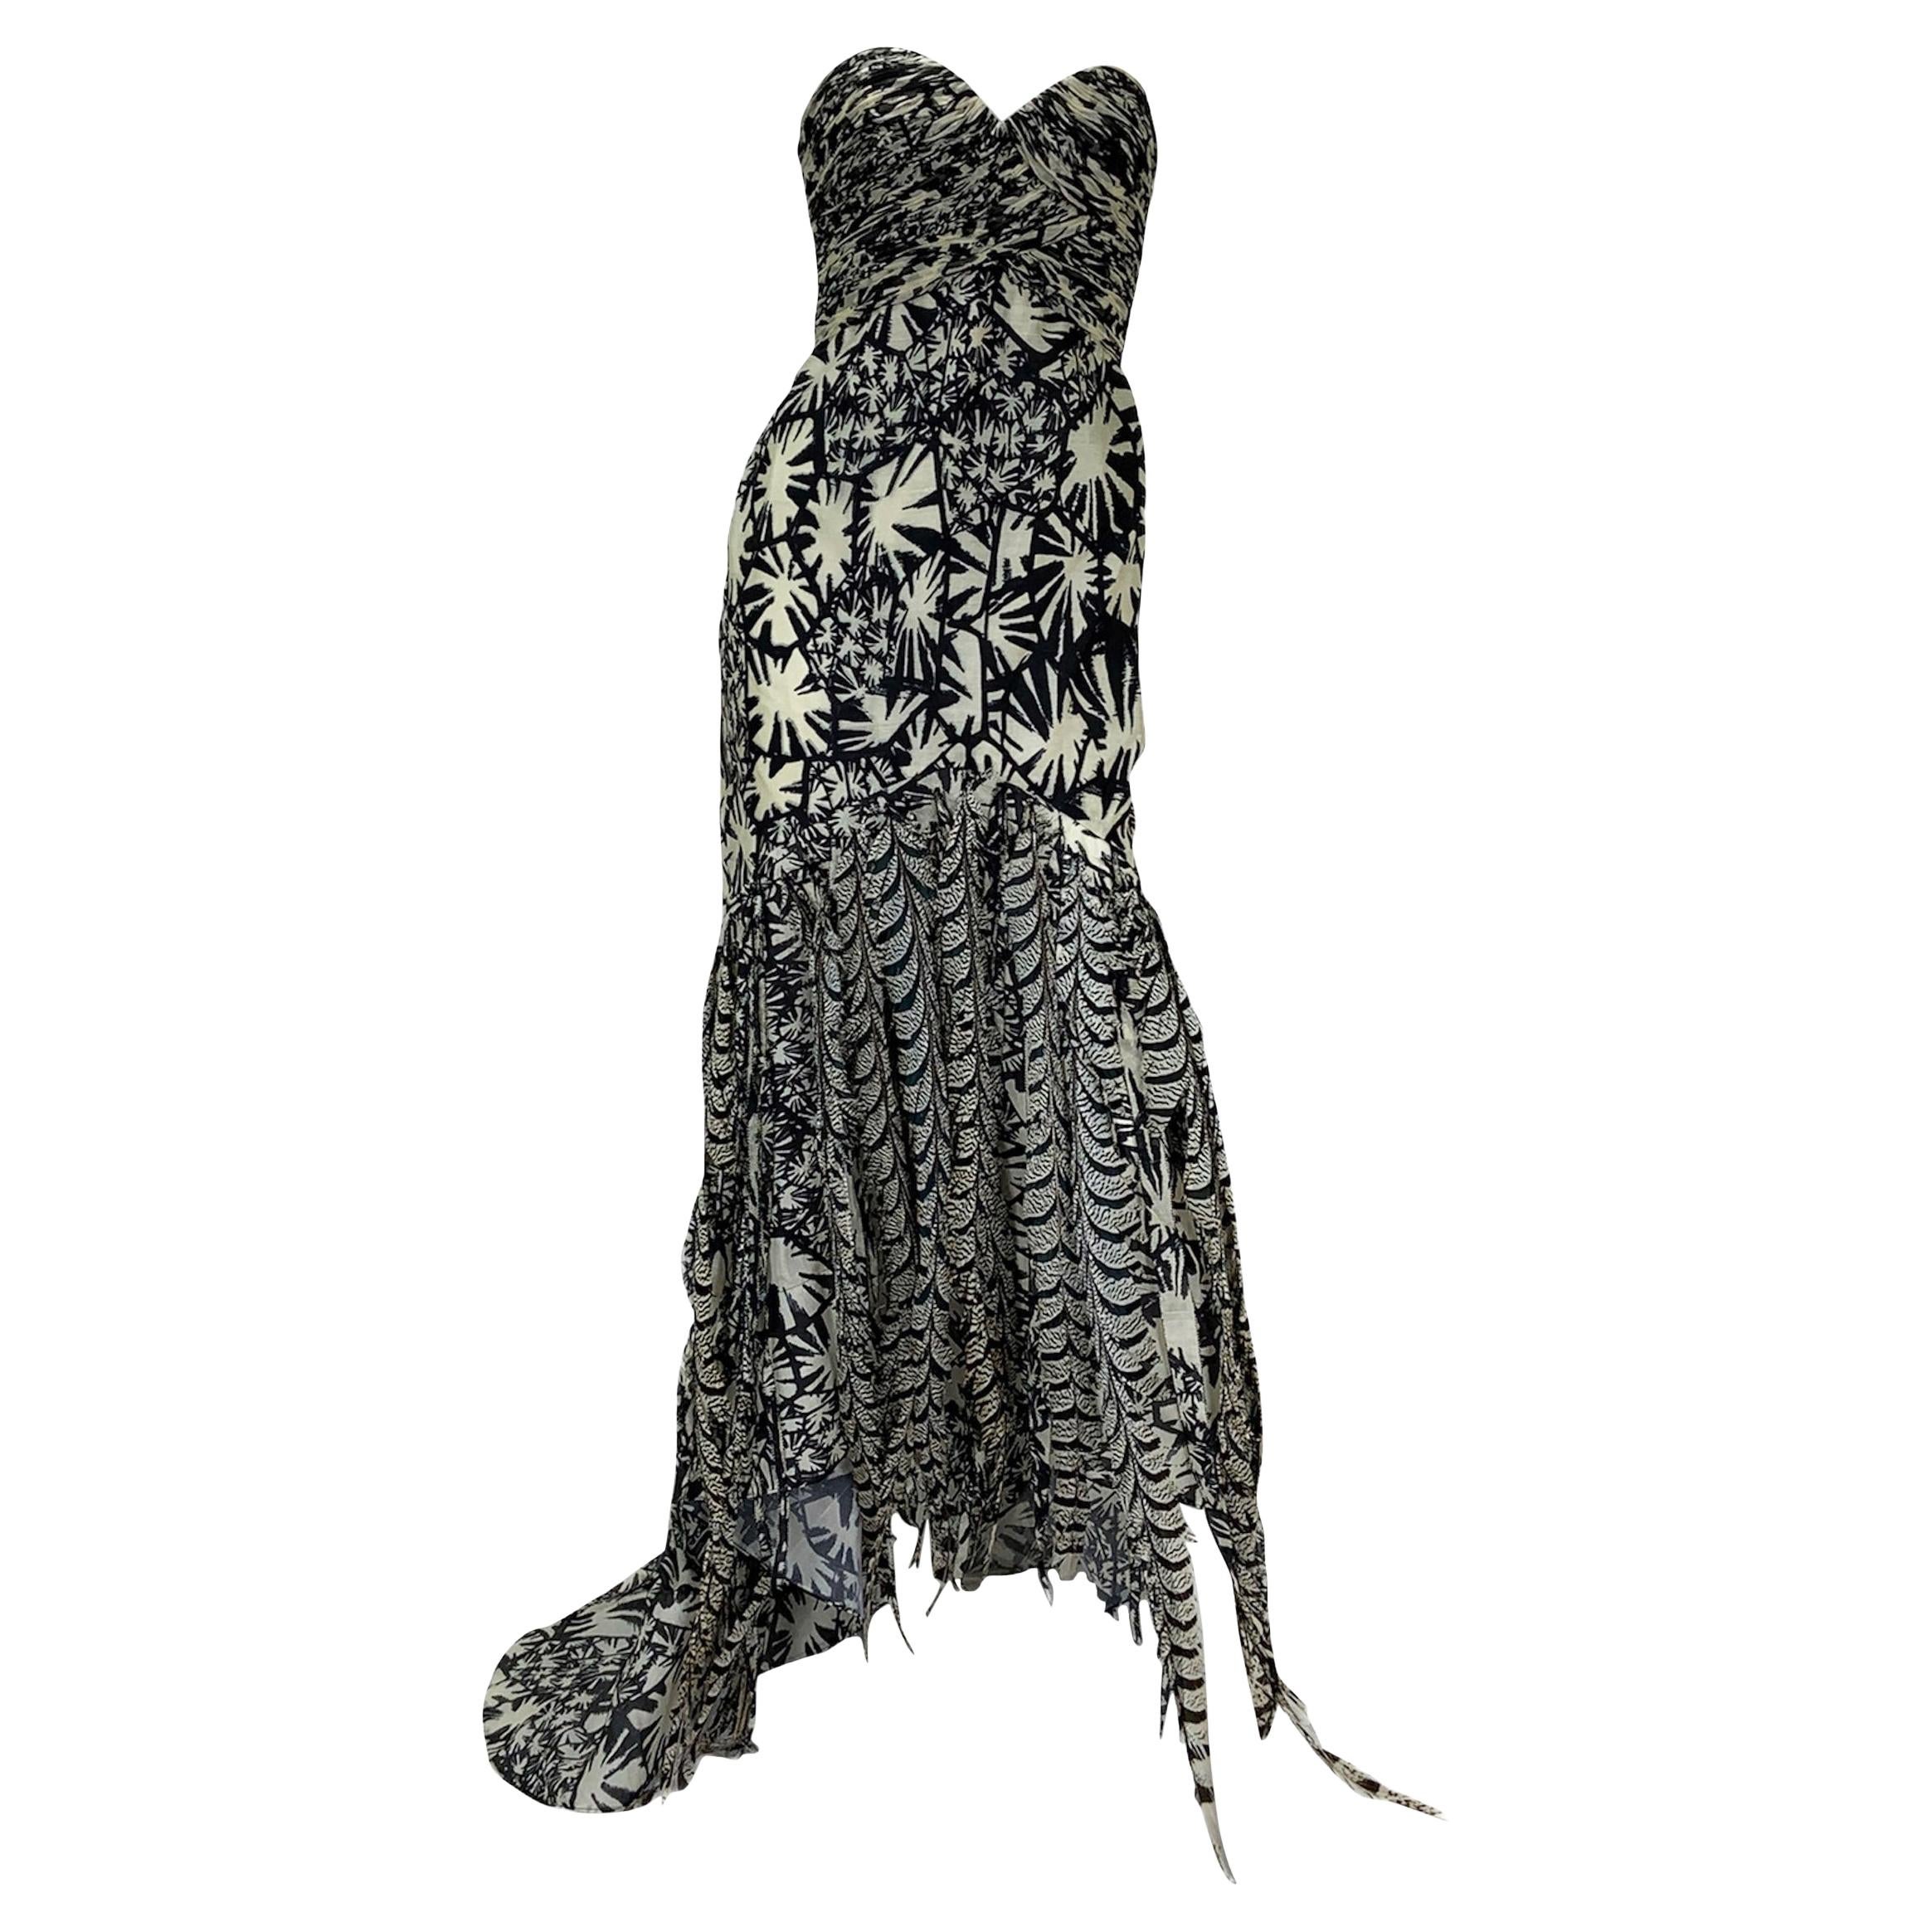 New Oscar de la Renta S/S 2008 AD Campaign Silk Pheasant Feather Dress Gown US 8